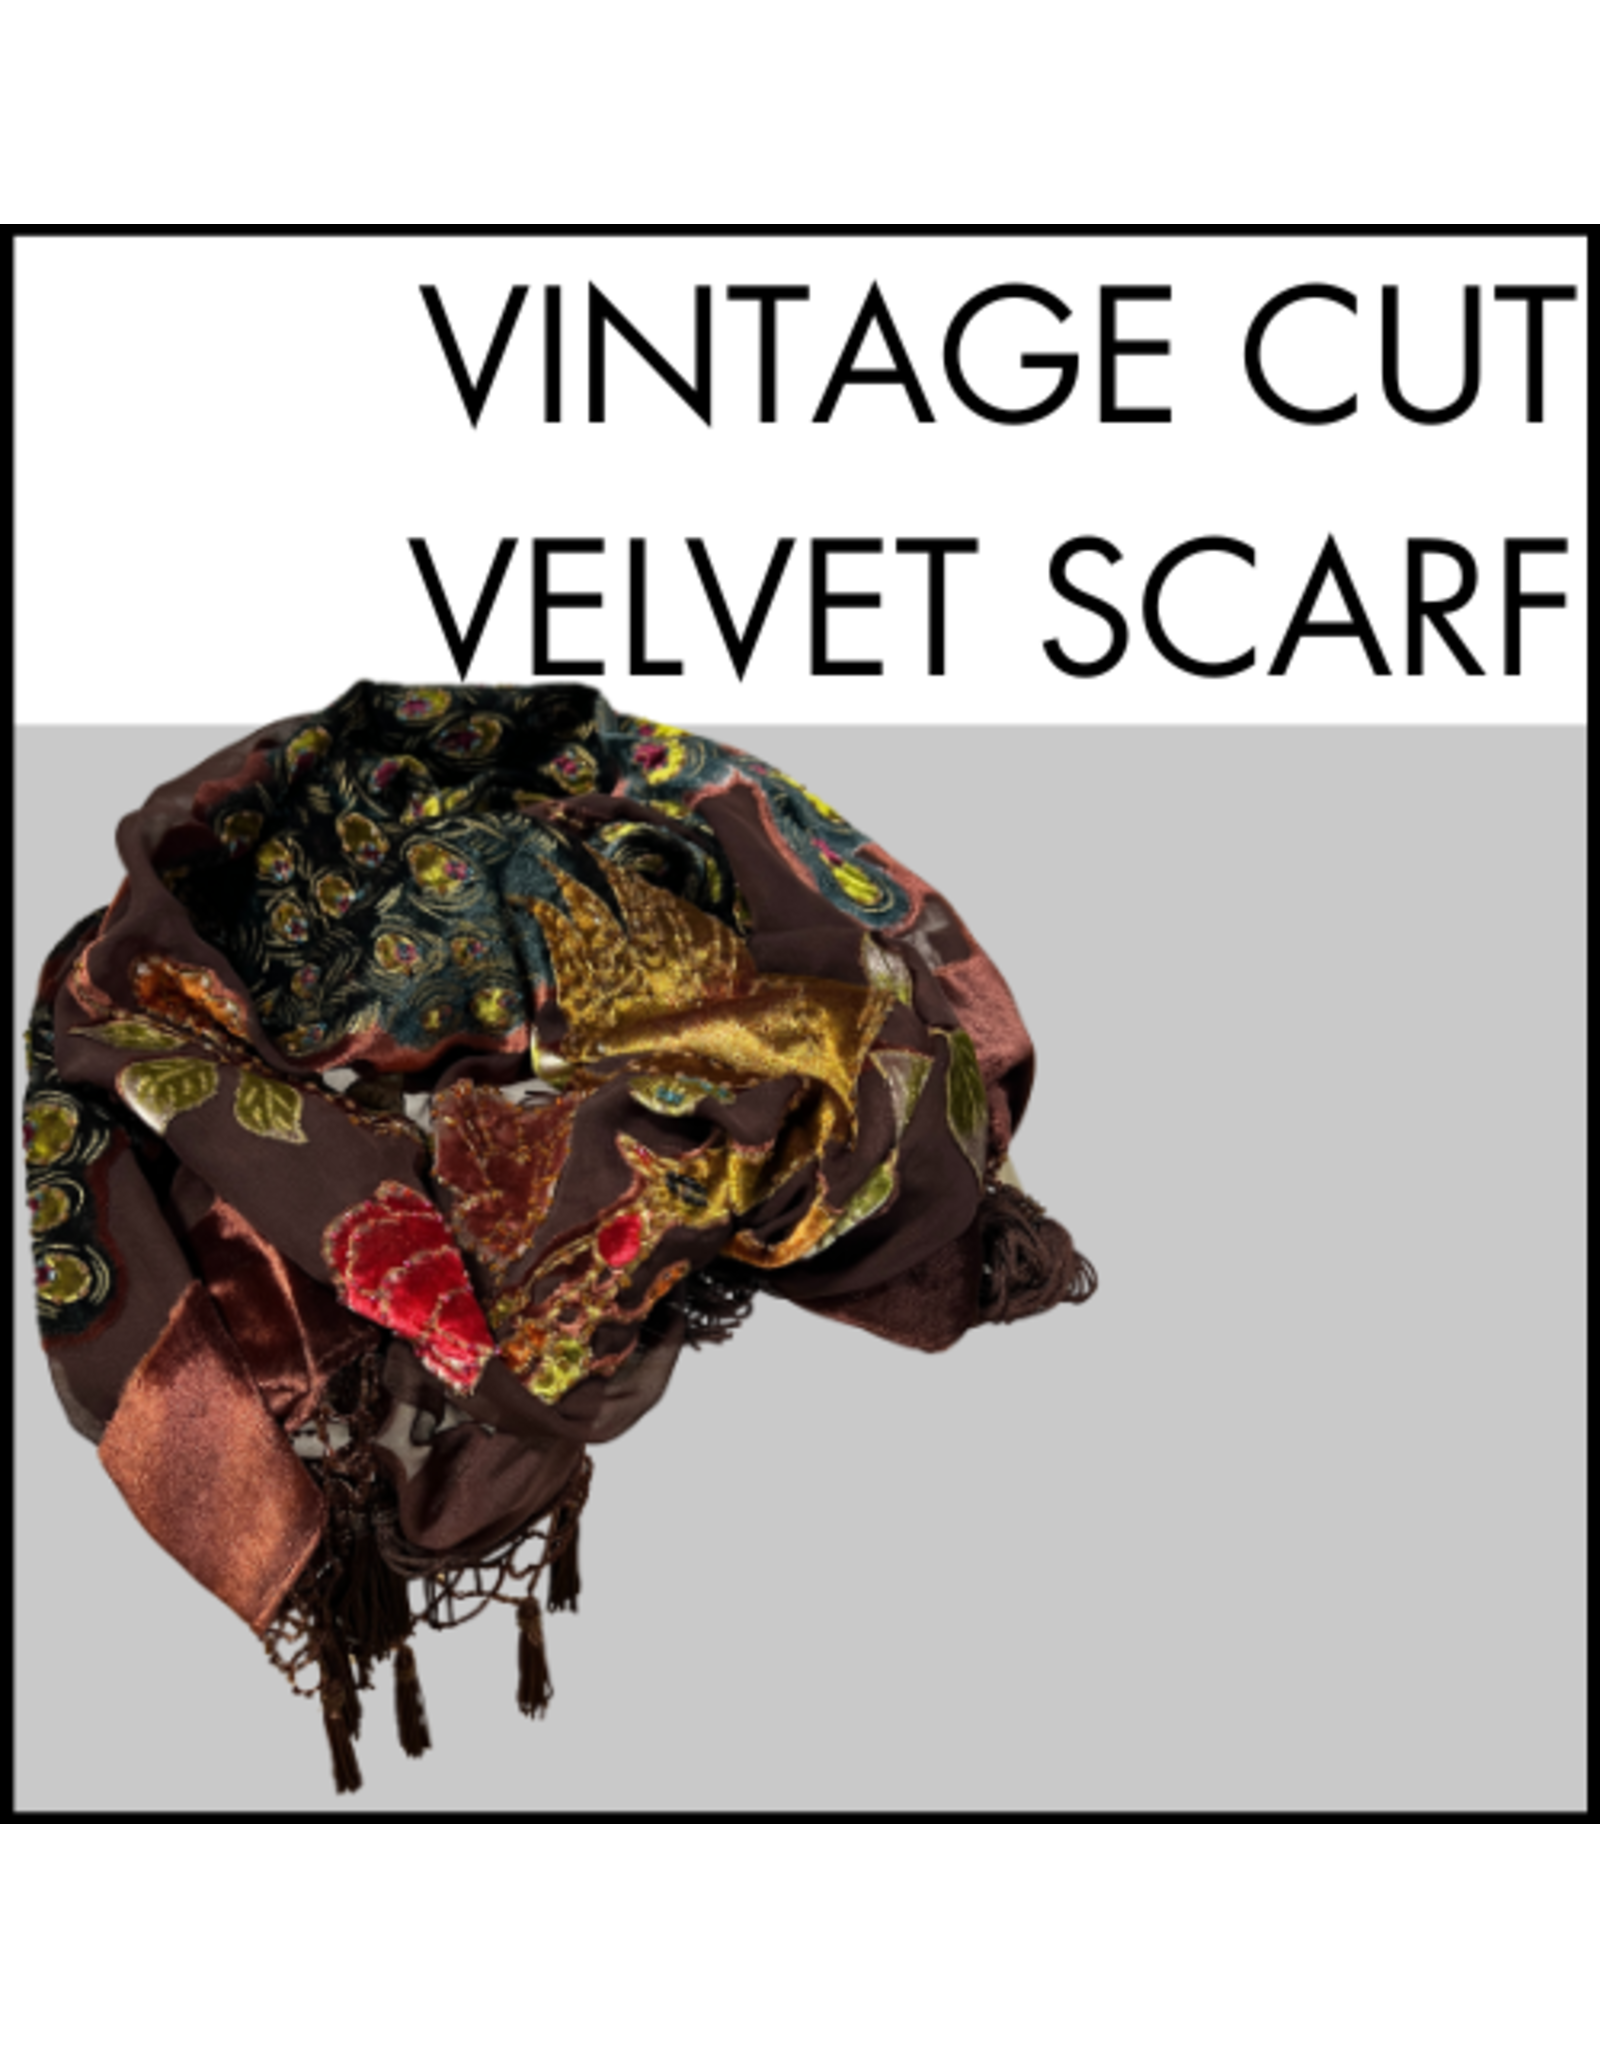 Vintage Cut Velvet Scarf